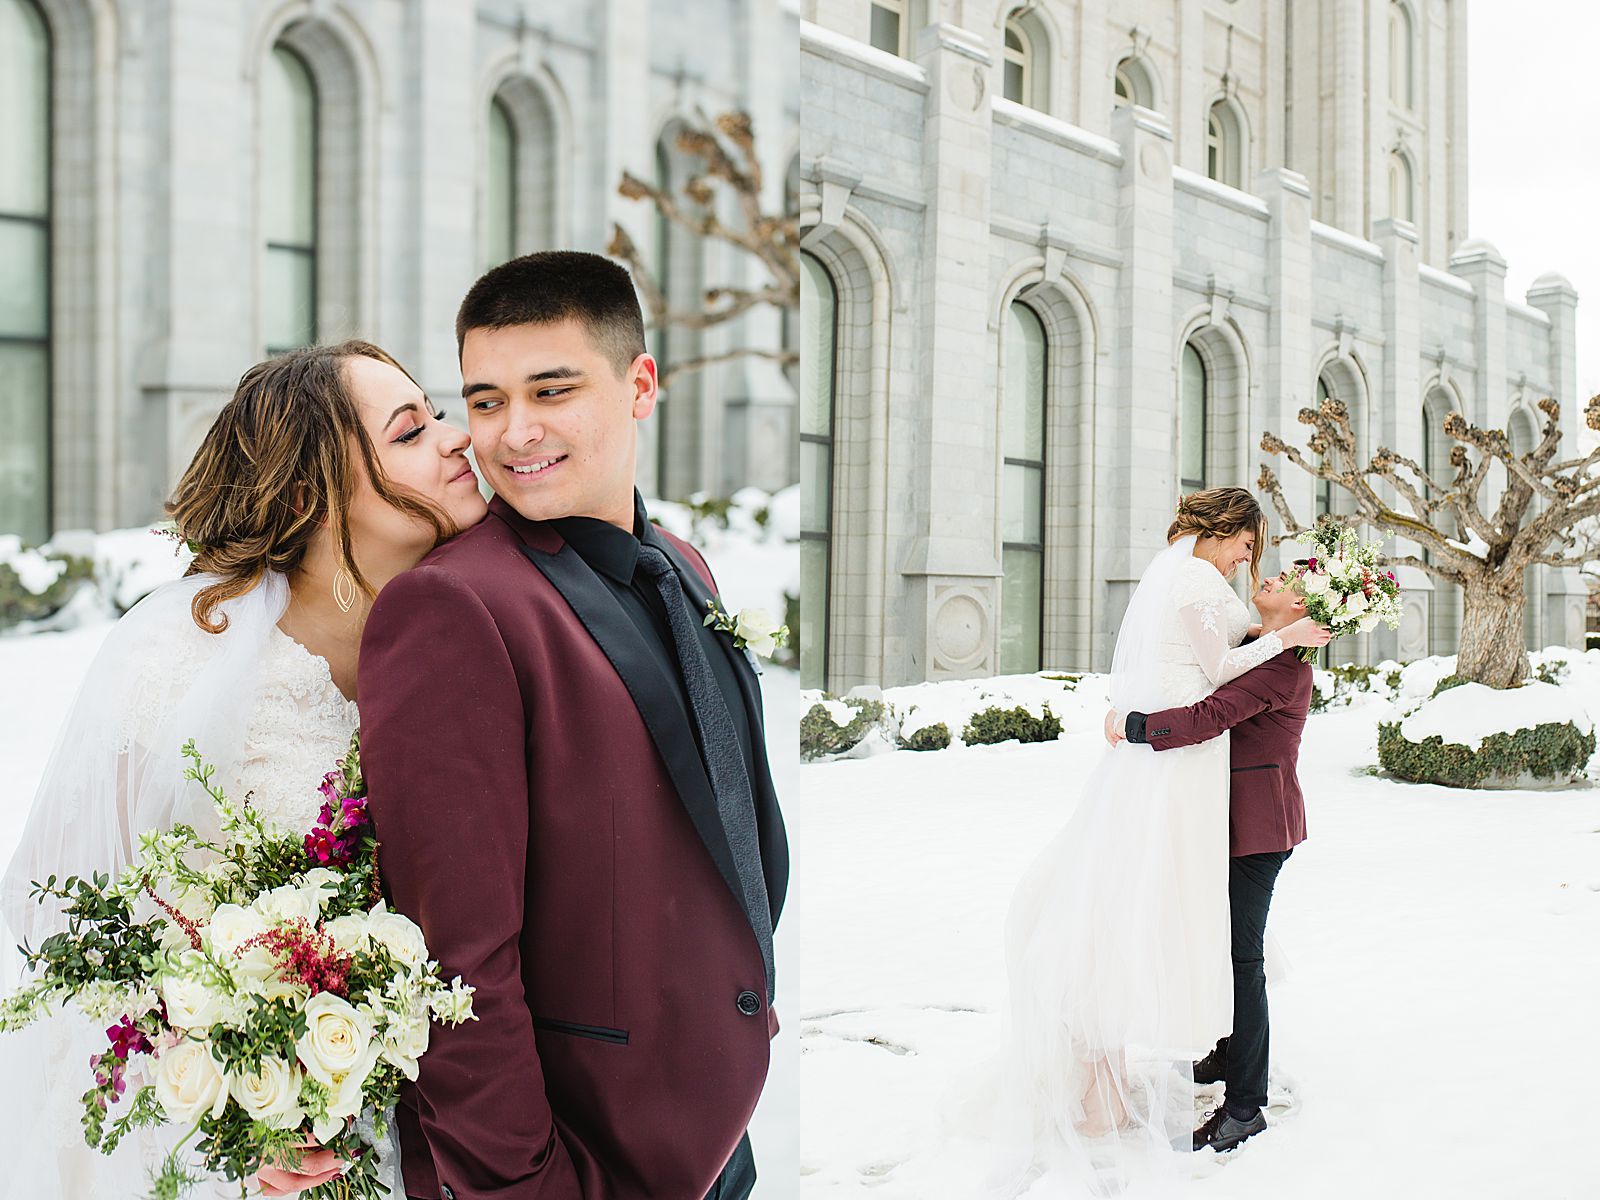 Salt Lake Temple Winter Wedding